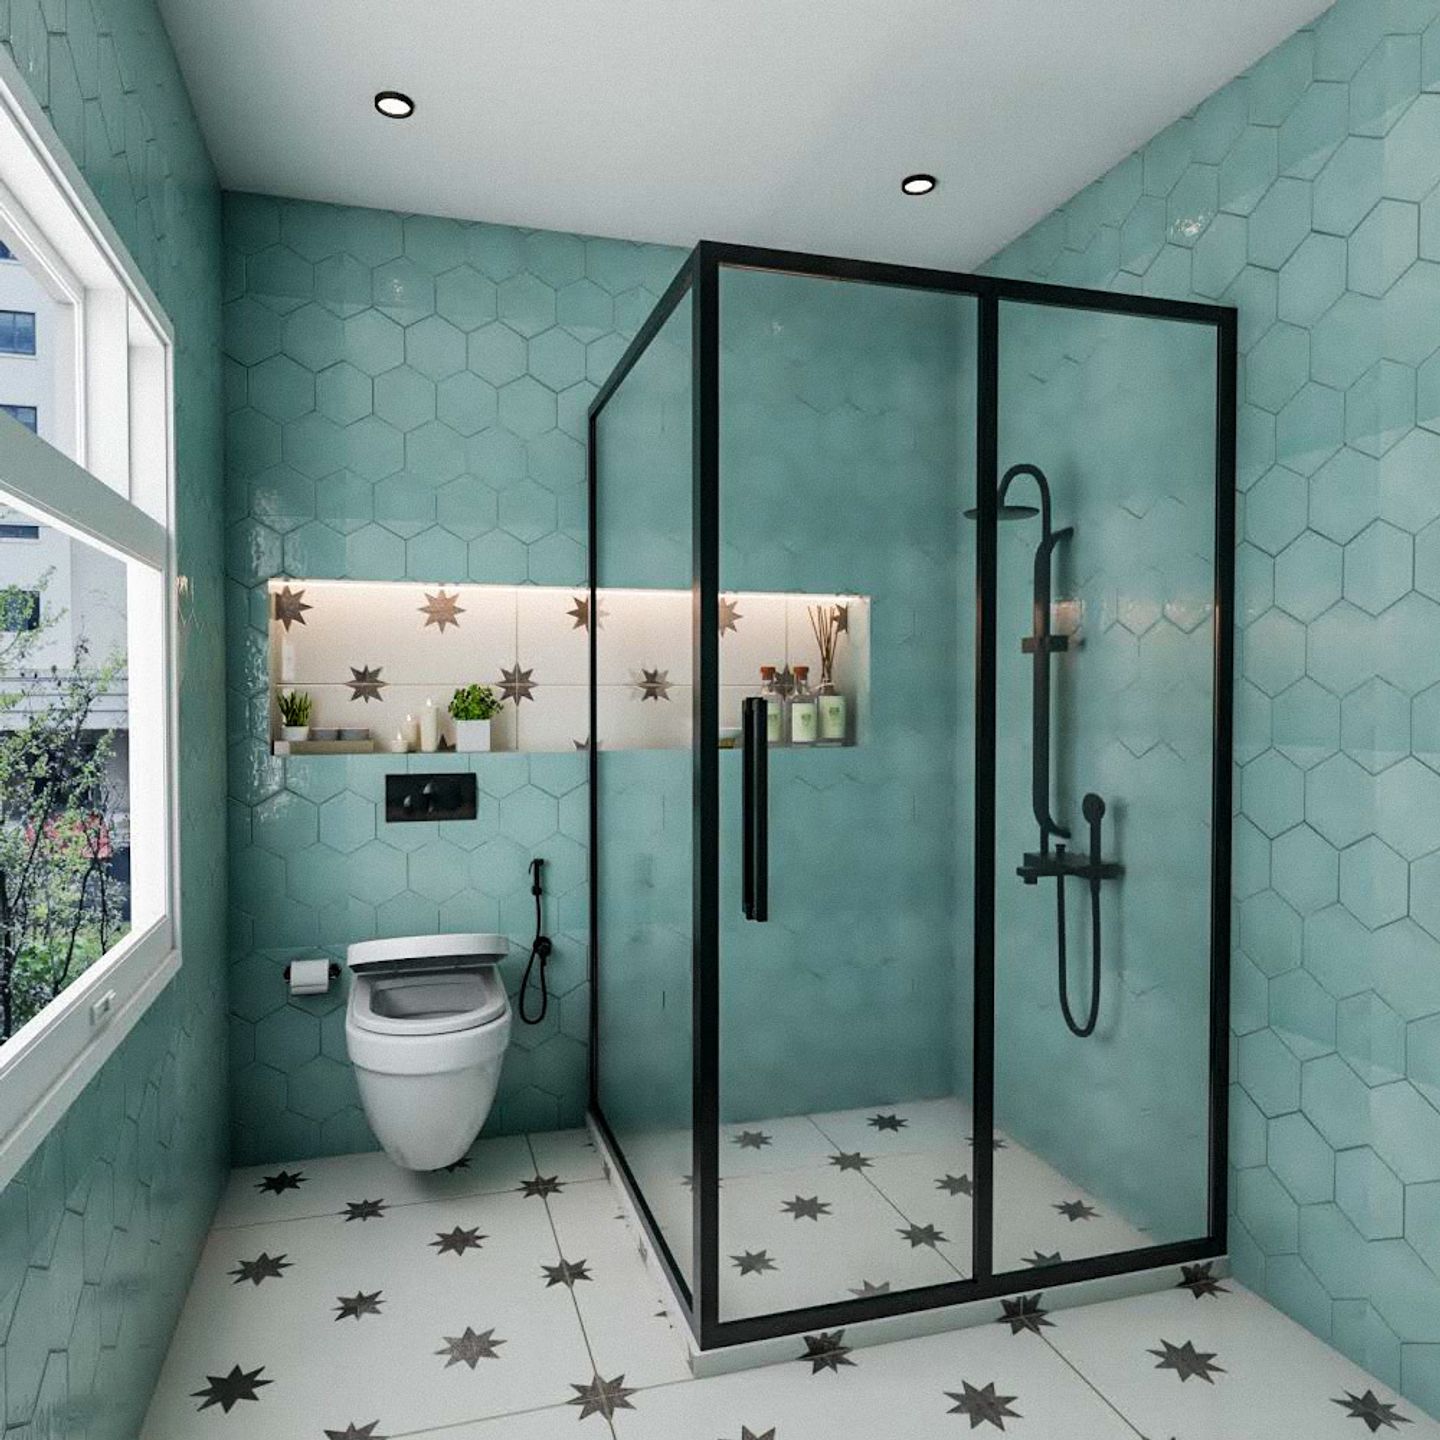 Aqua Green Bathroom Design With Hexagonal Tile Pattern - Livspace